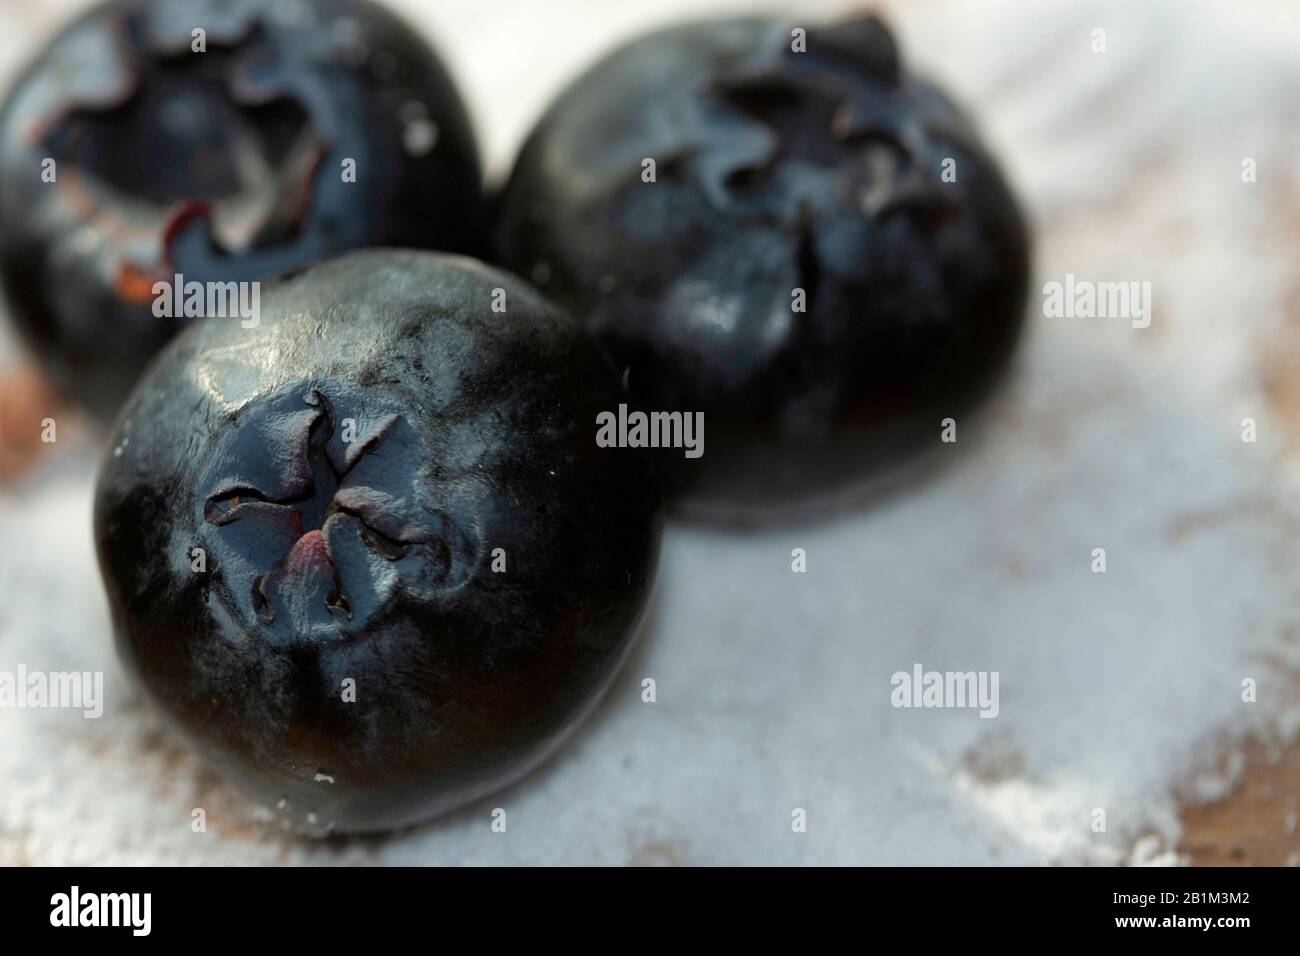 Juicy Blueberries jumbo macro on sugar-free aspartame bed on wood